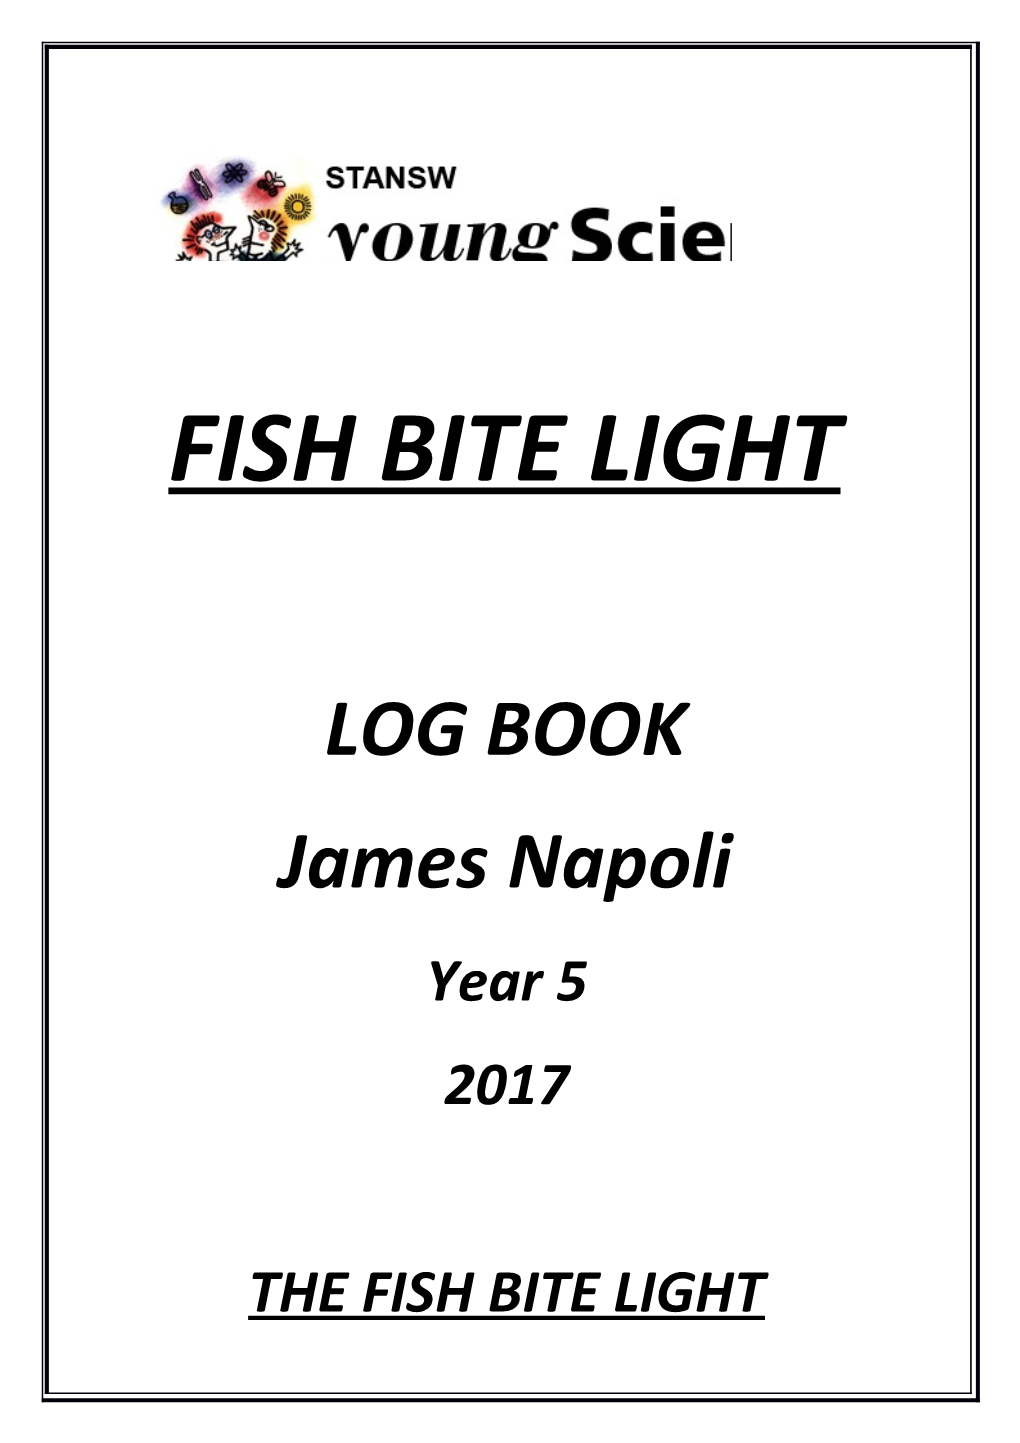 The Fish Bite Light